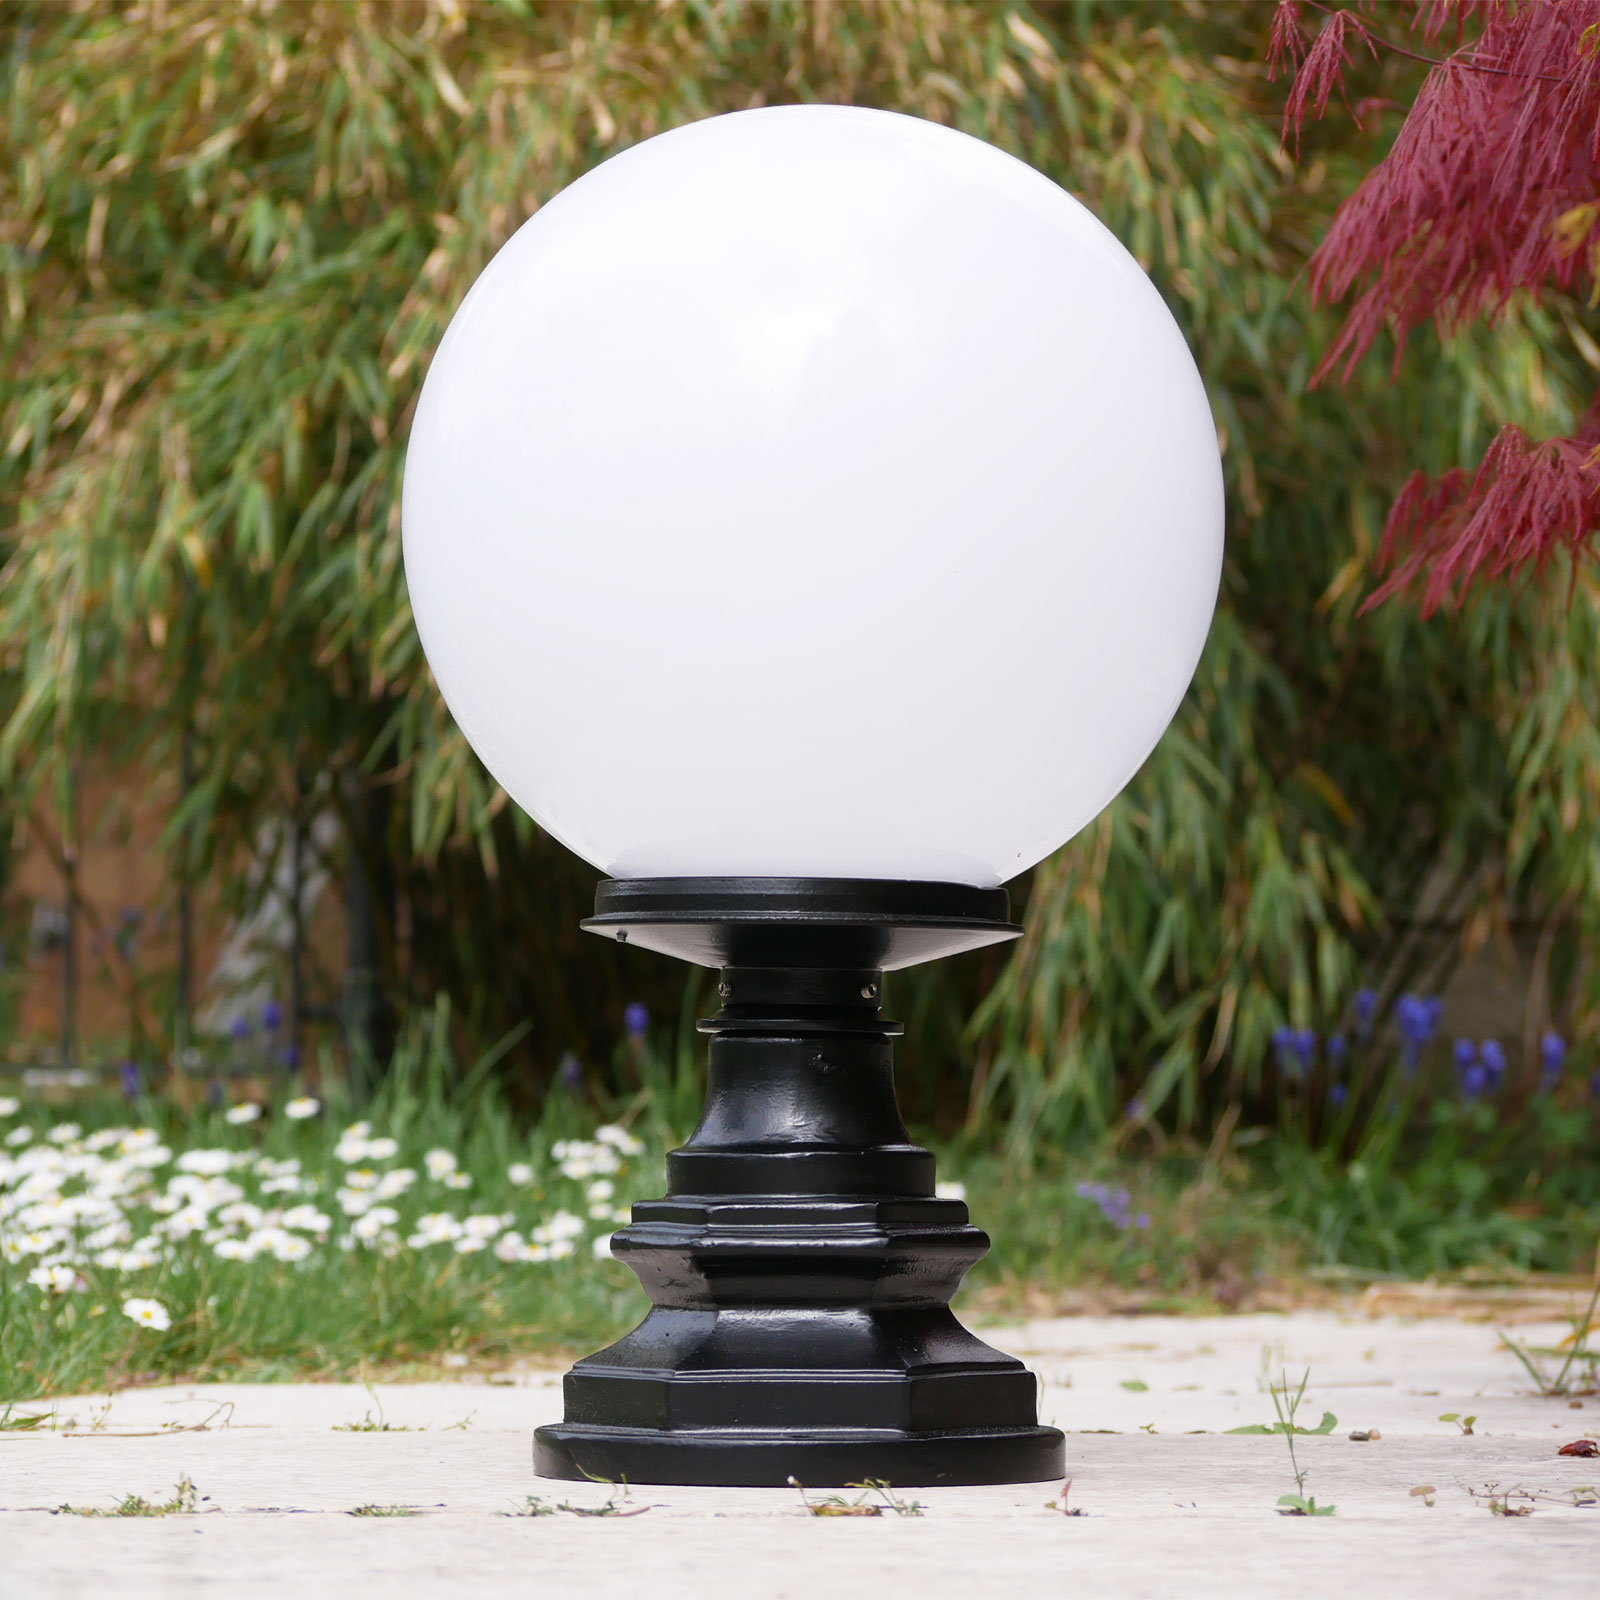 Classic Garden Globe Light CYPR 02 in Three Sizes